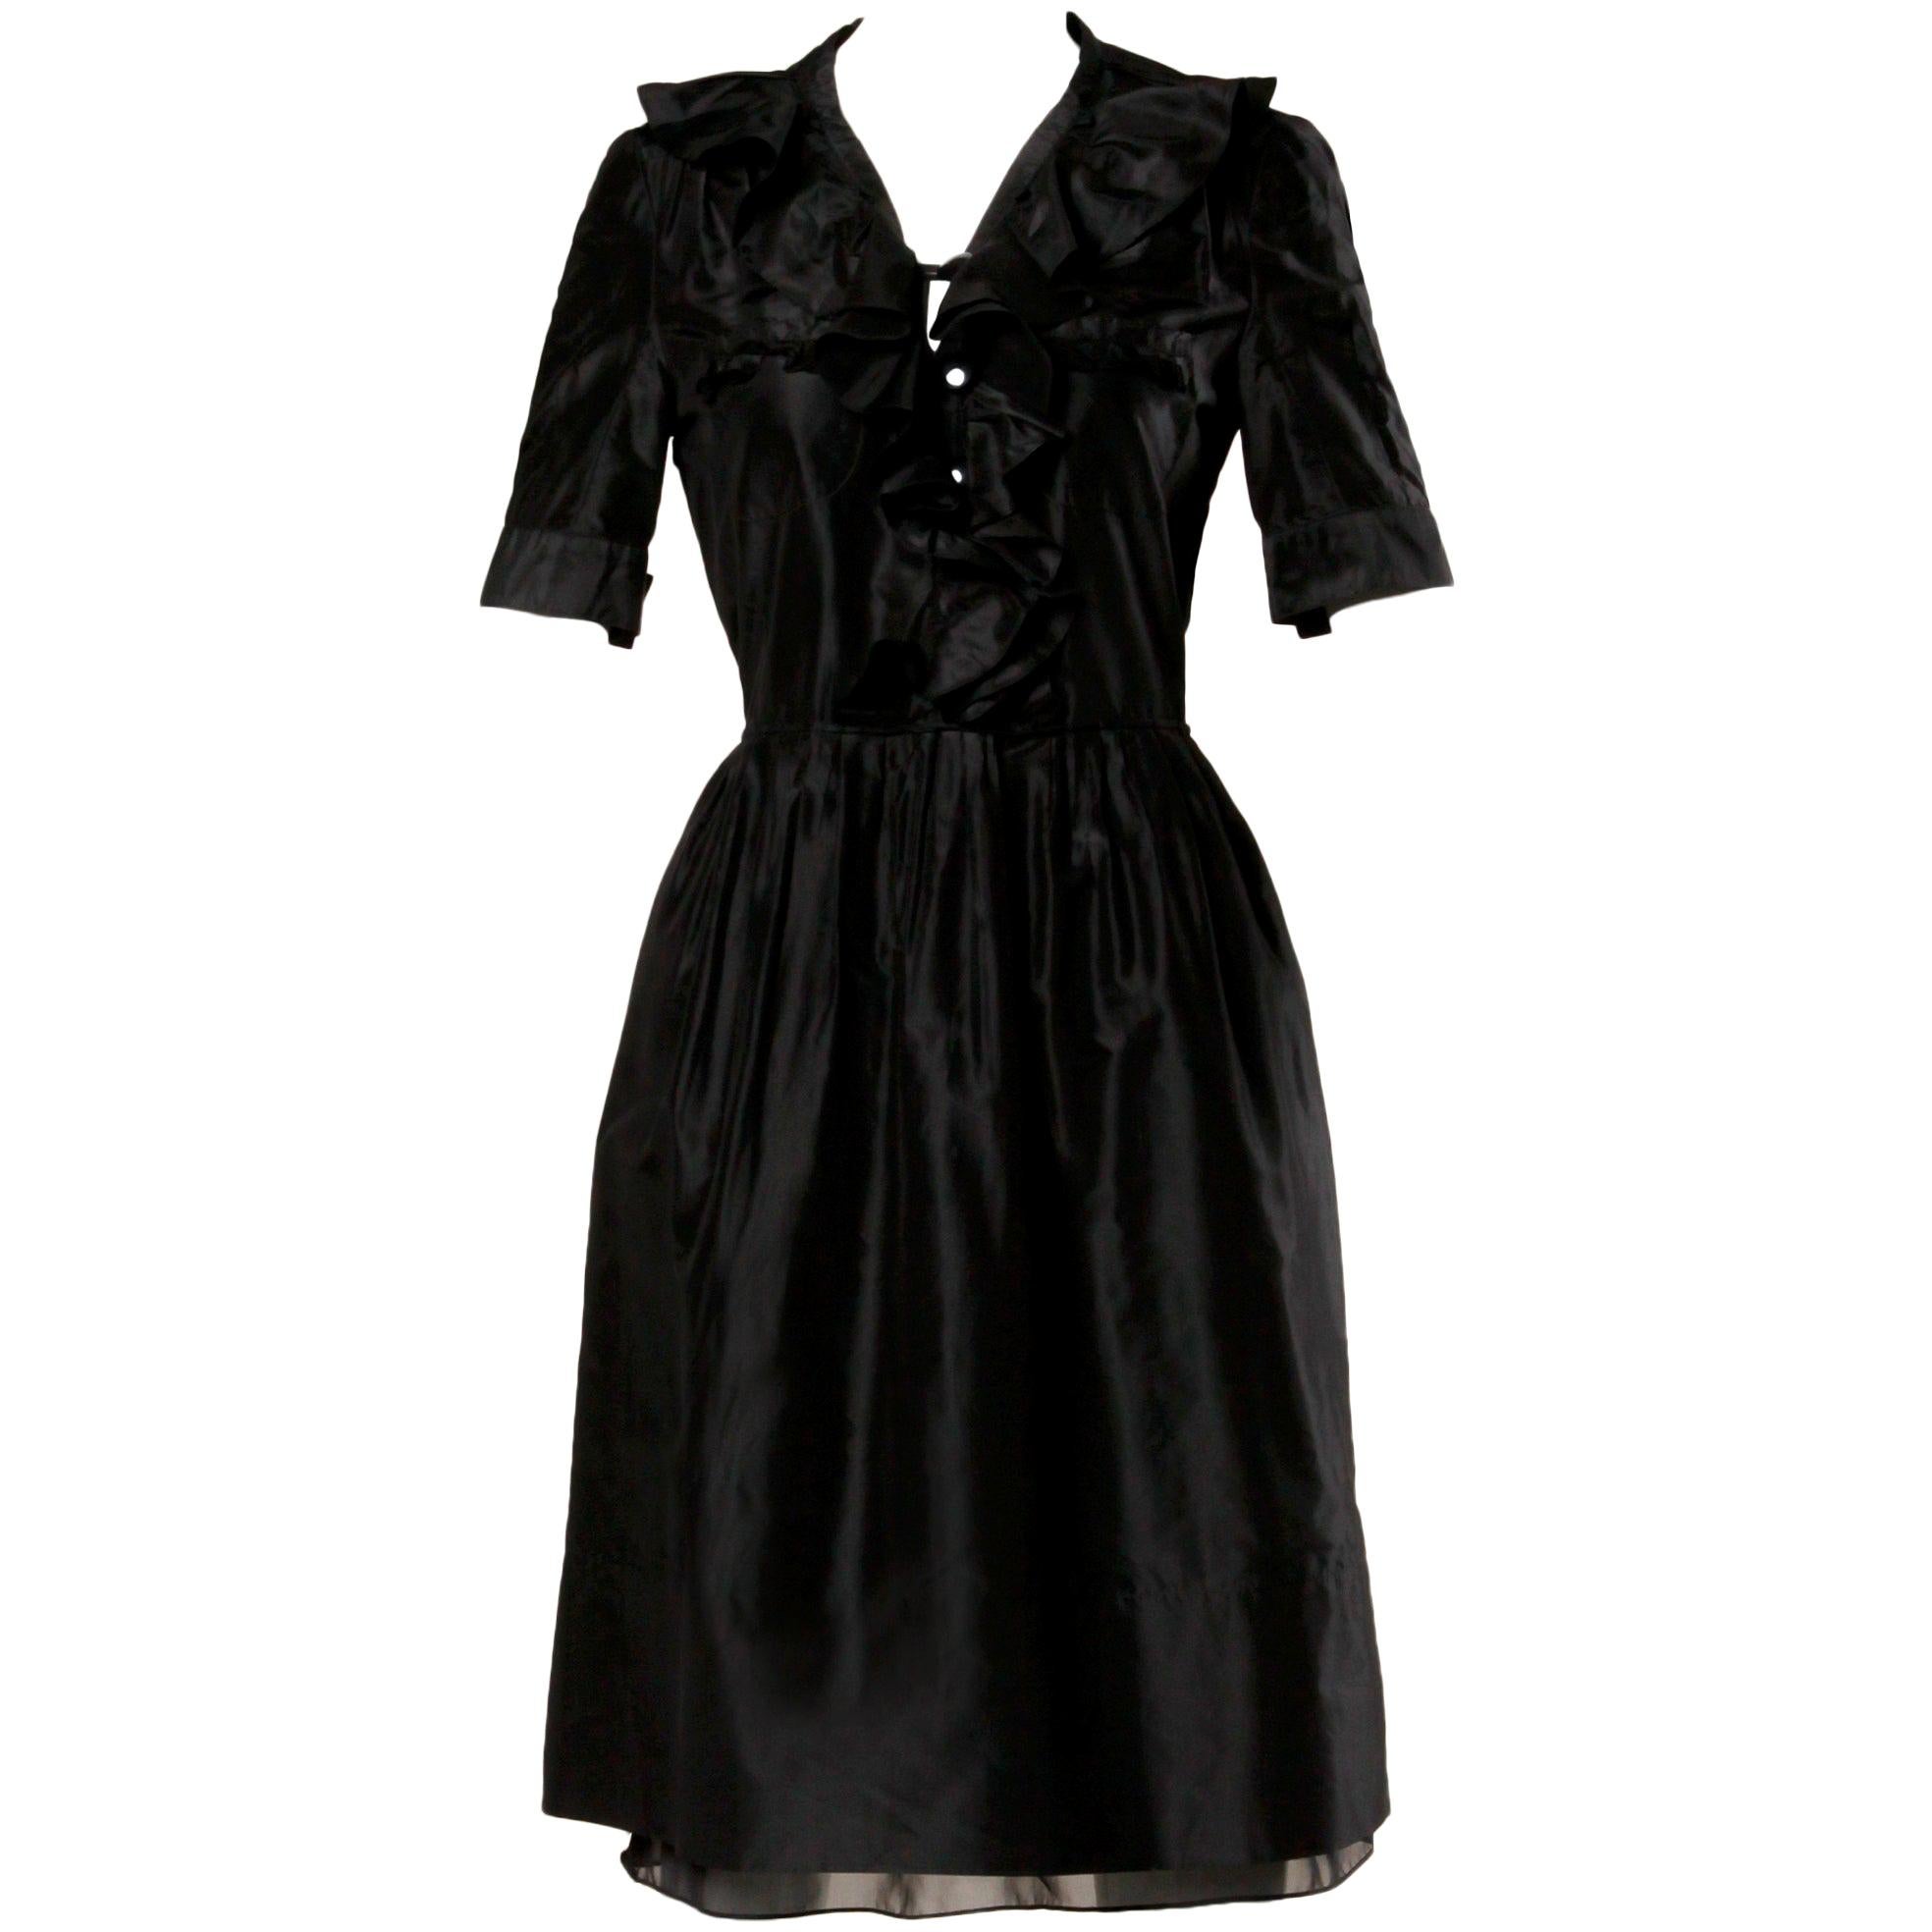 Chloe Black Silk Taffeta Dress wth Ruffled Collar For Sale